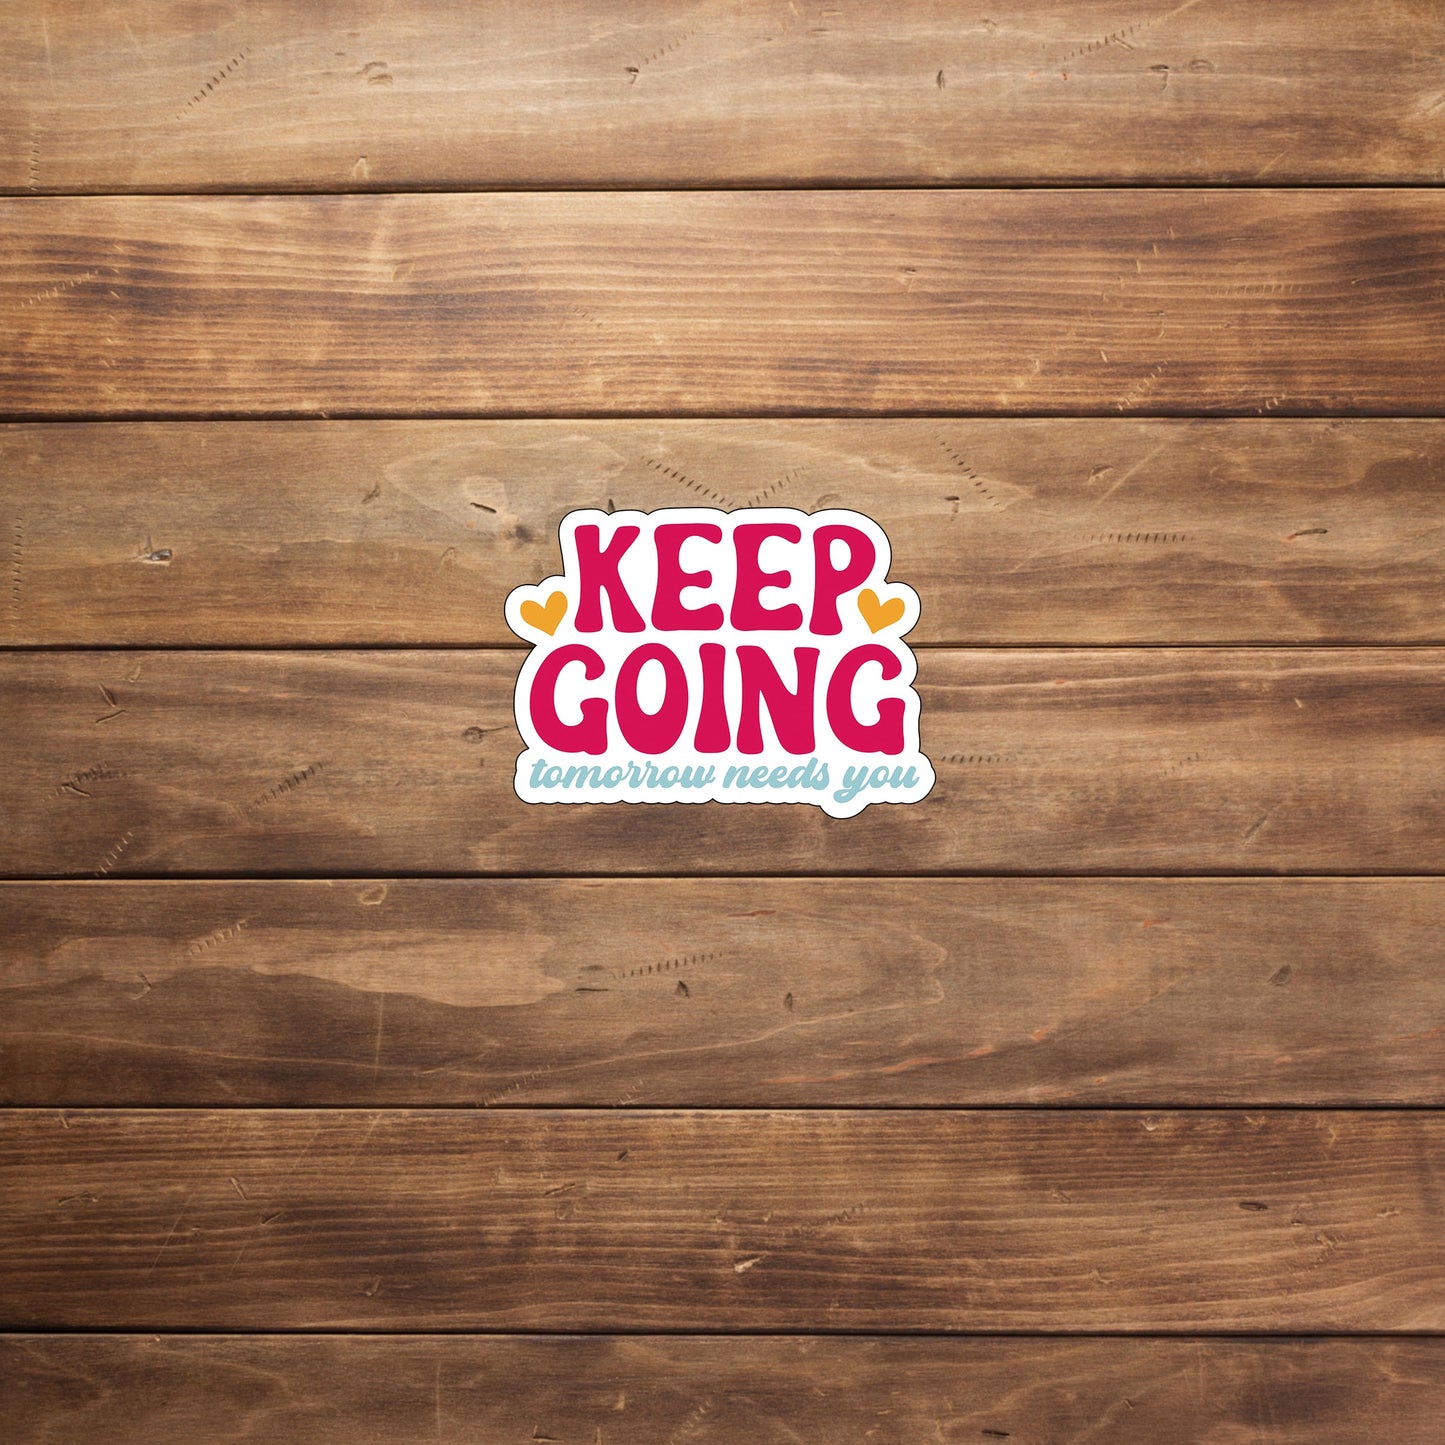 Keep going tomorrow needs you  Sticker,  Vinyl sticker, laptop sticker, Tablet sticker